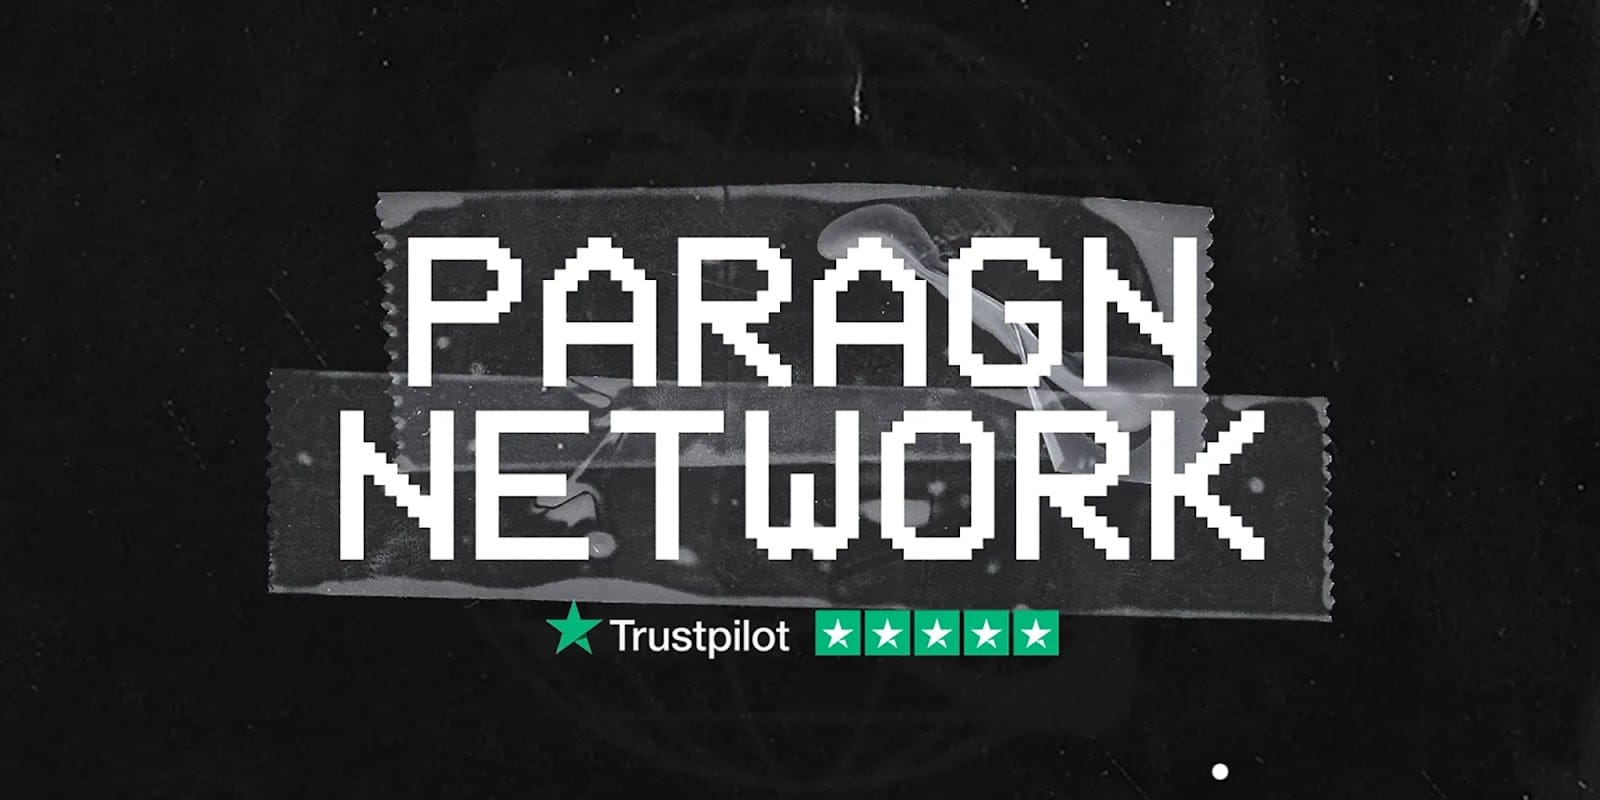 paragn network